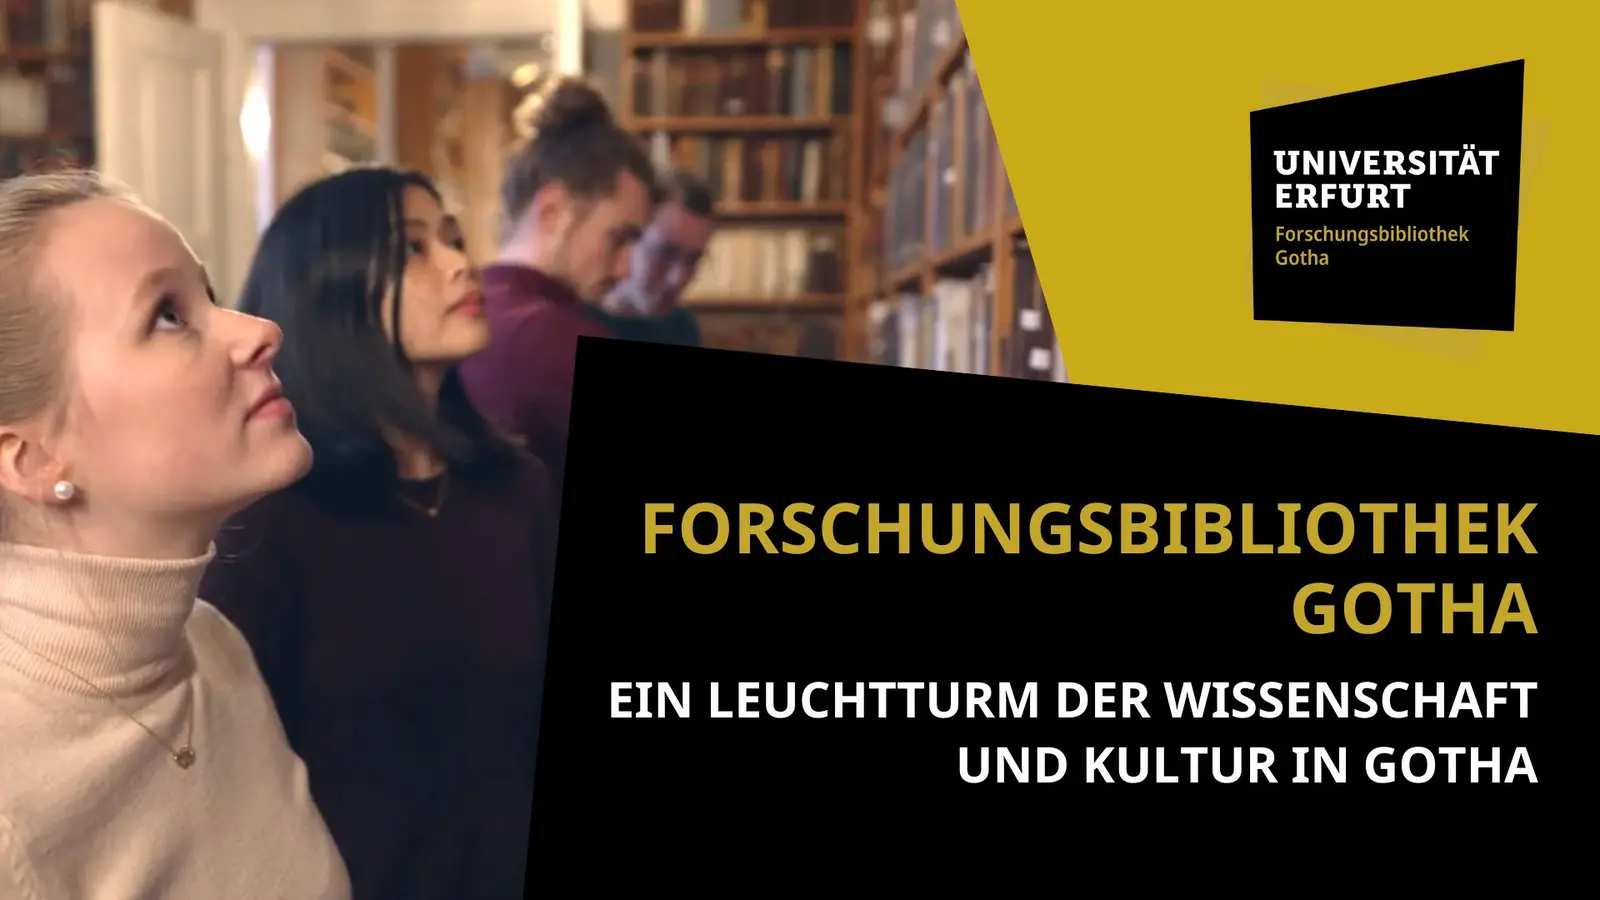 Video Forschungsbibliothek Gotha